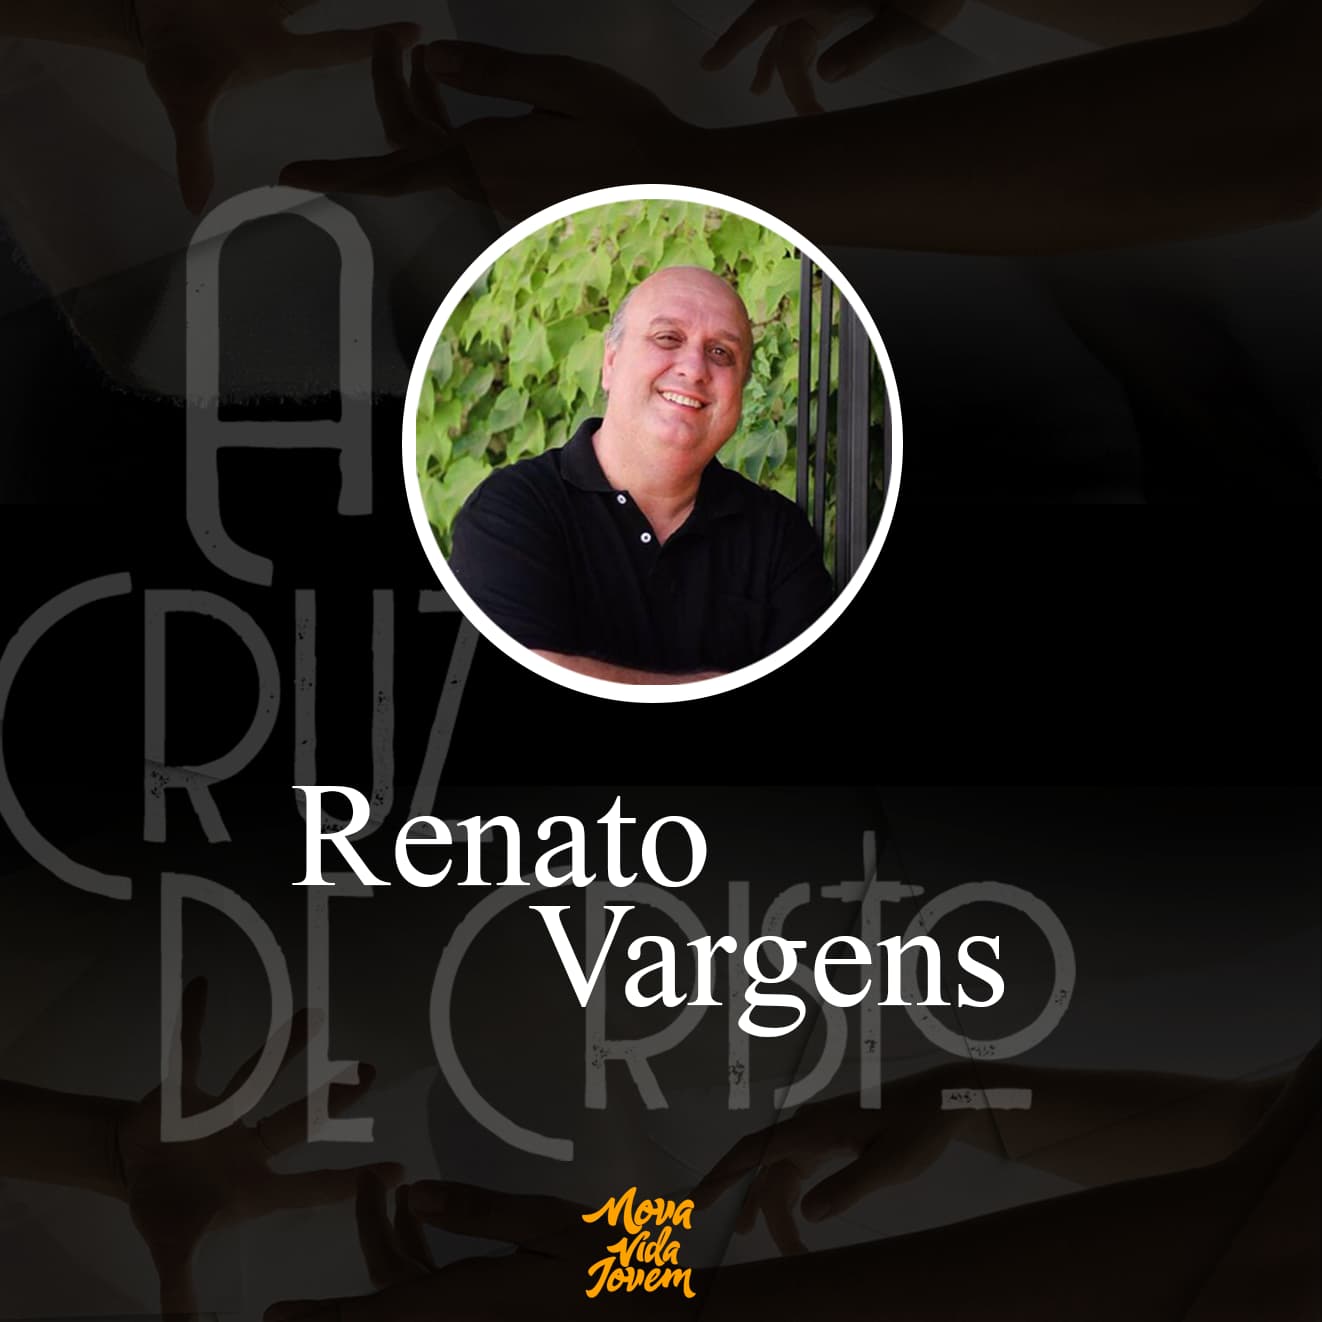 Pr. Renato Vargens